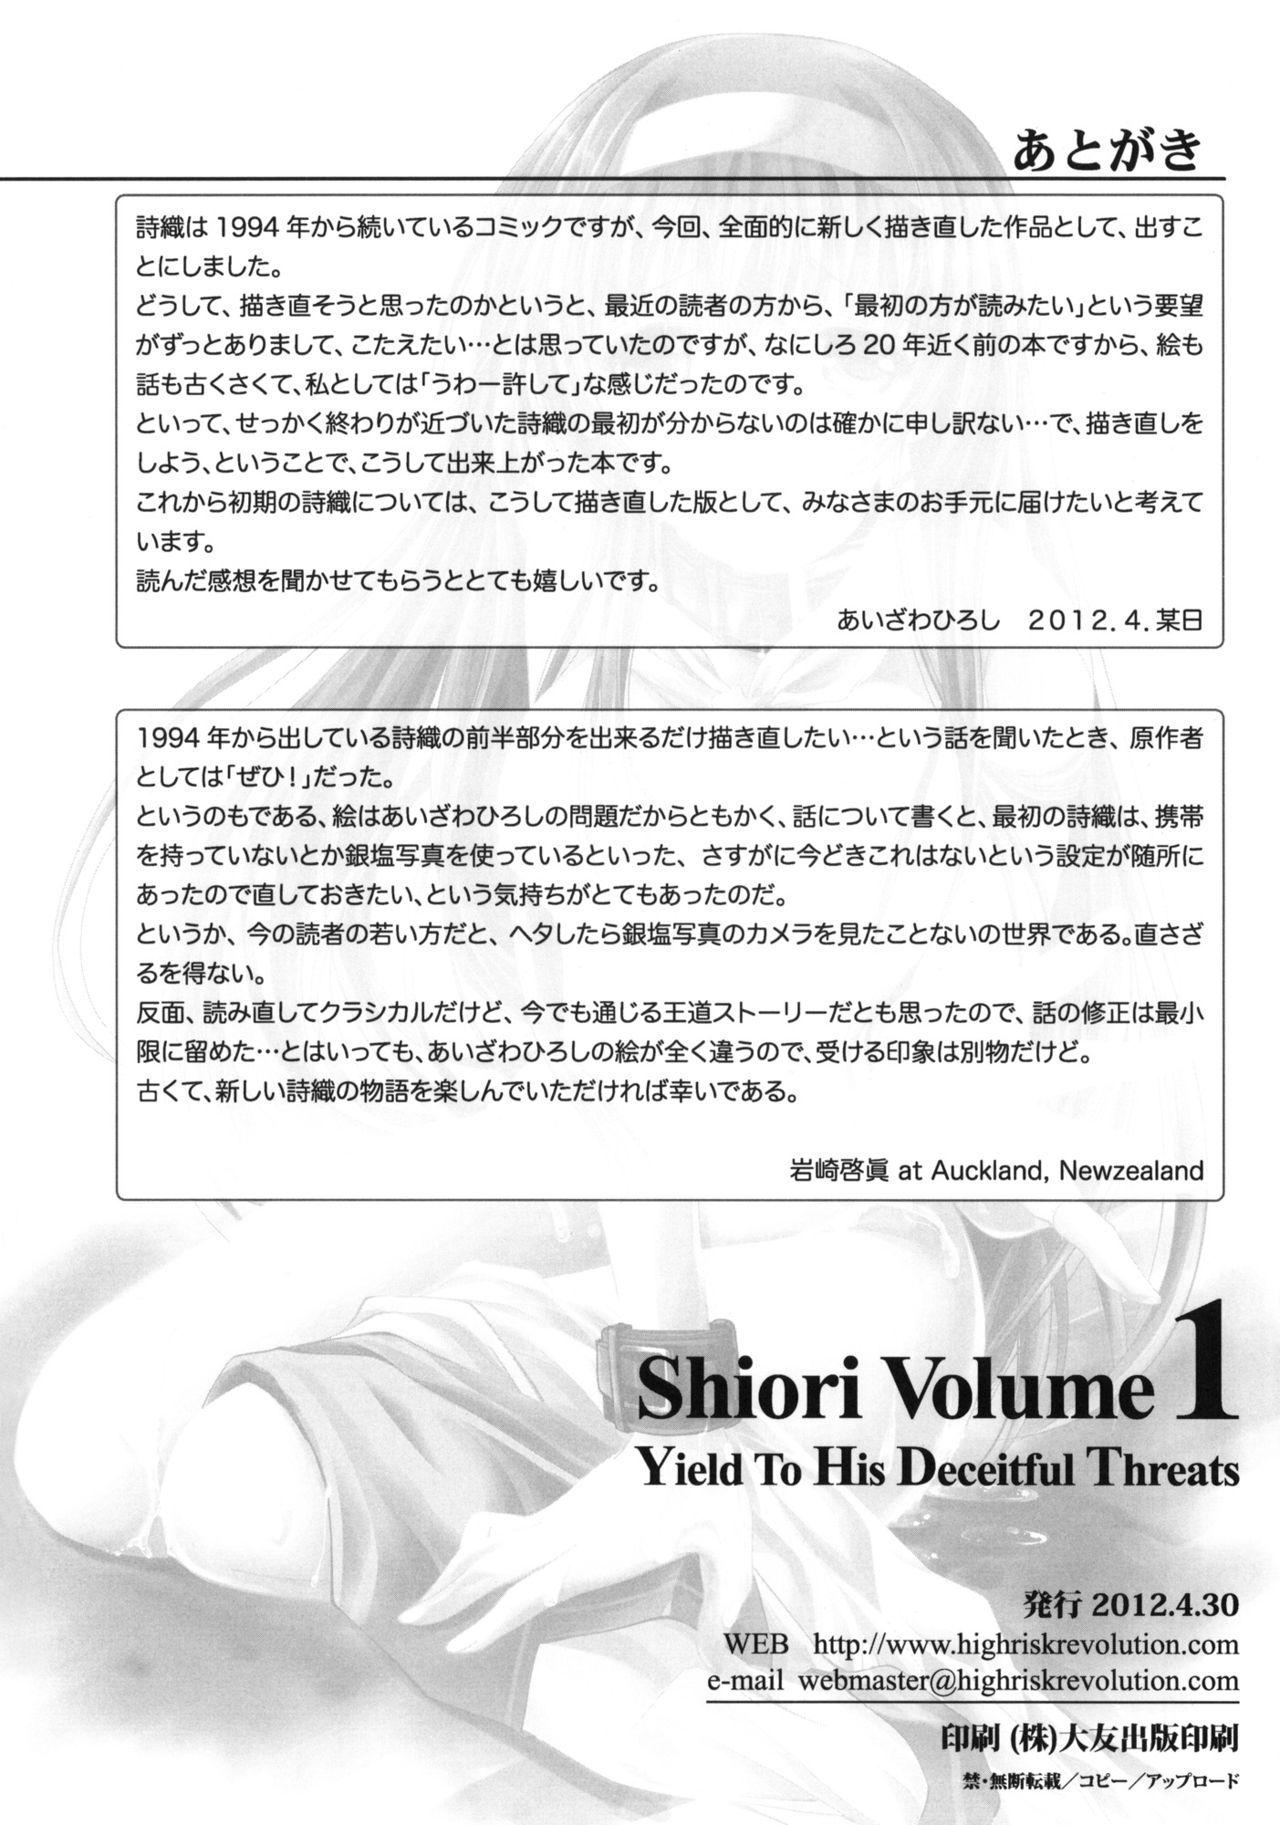 Shiori day 1 - Yeild to its deceitful threats 42